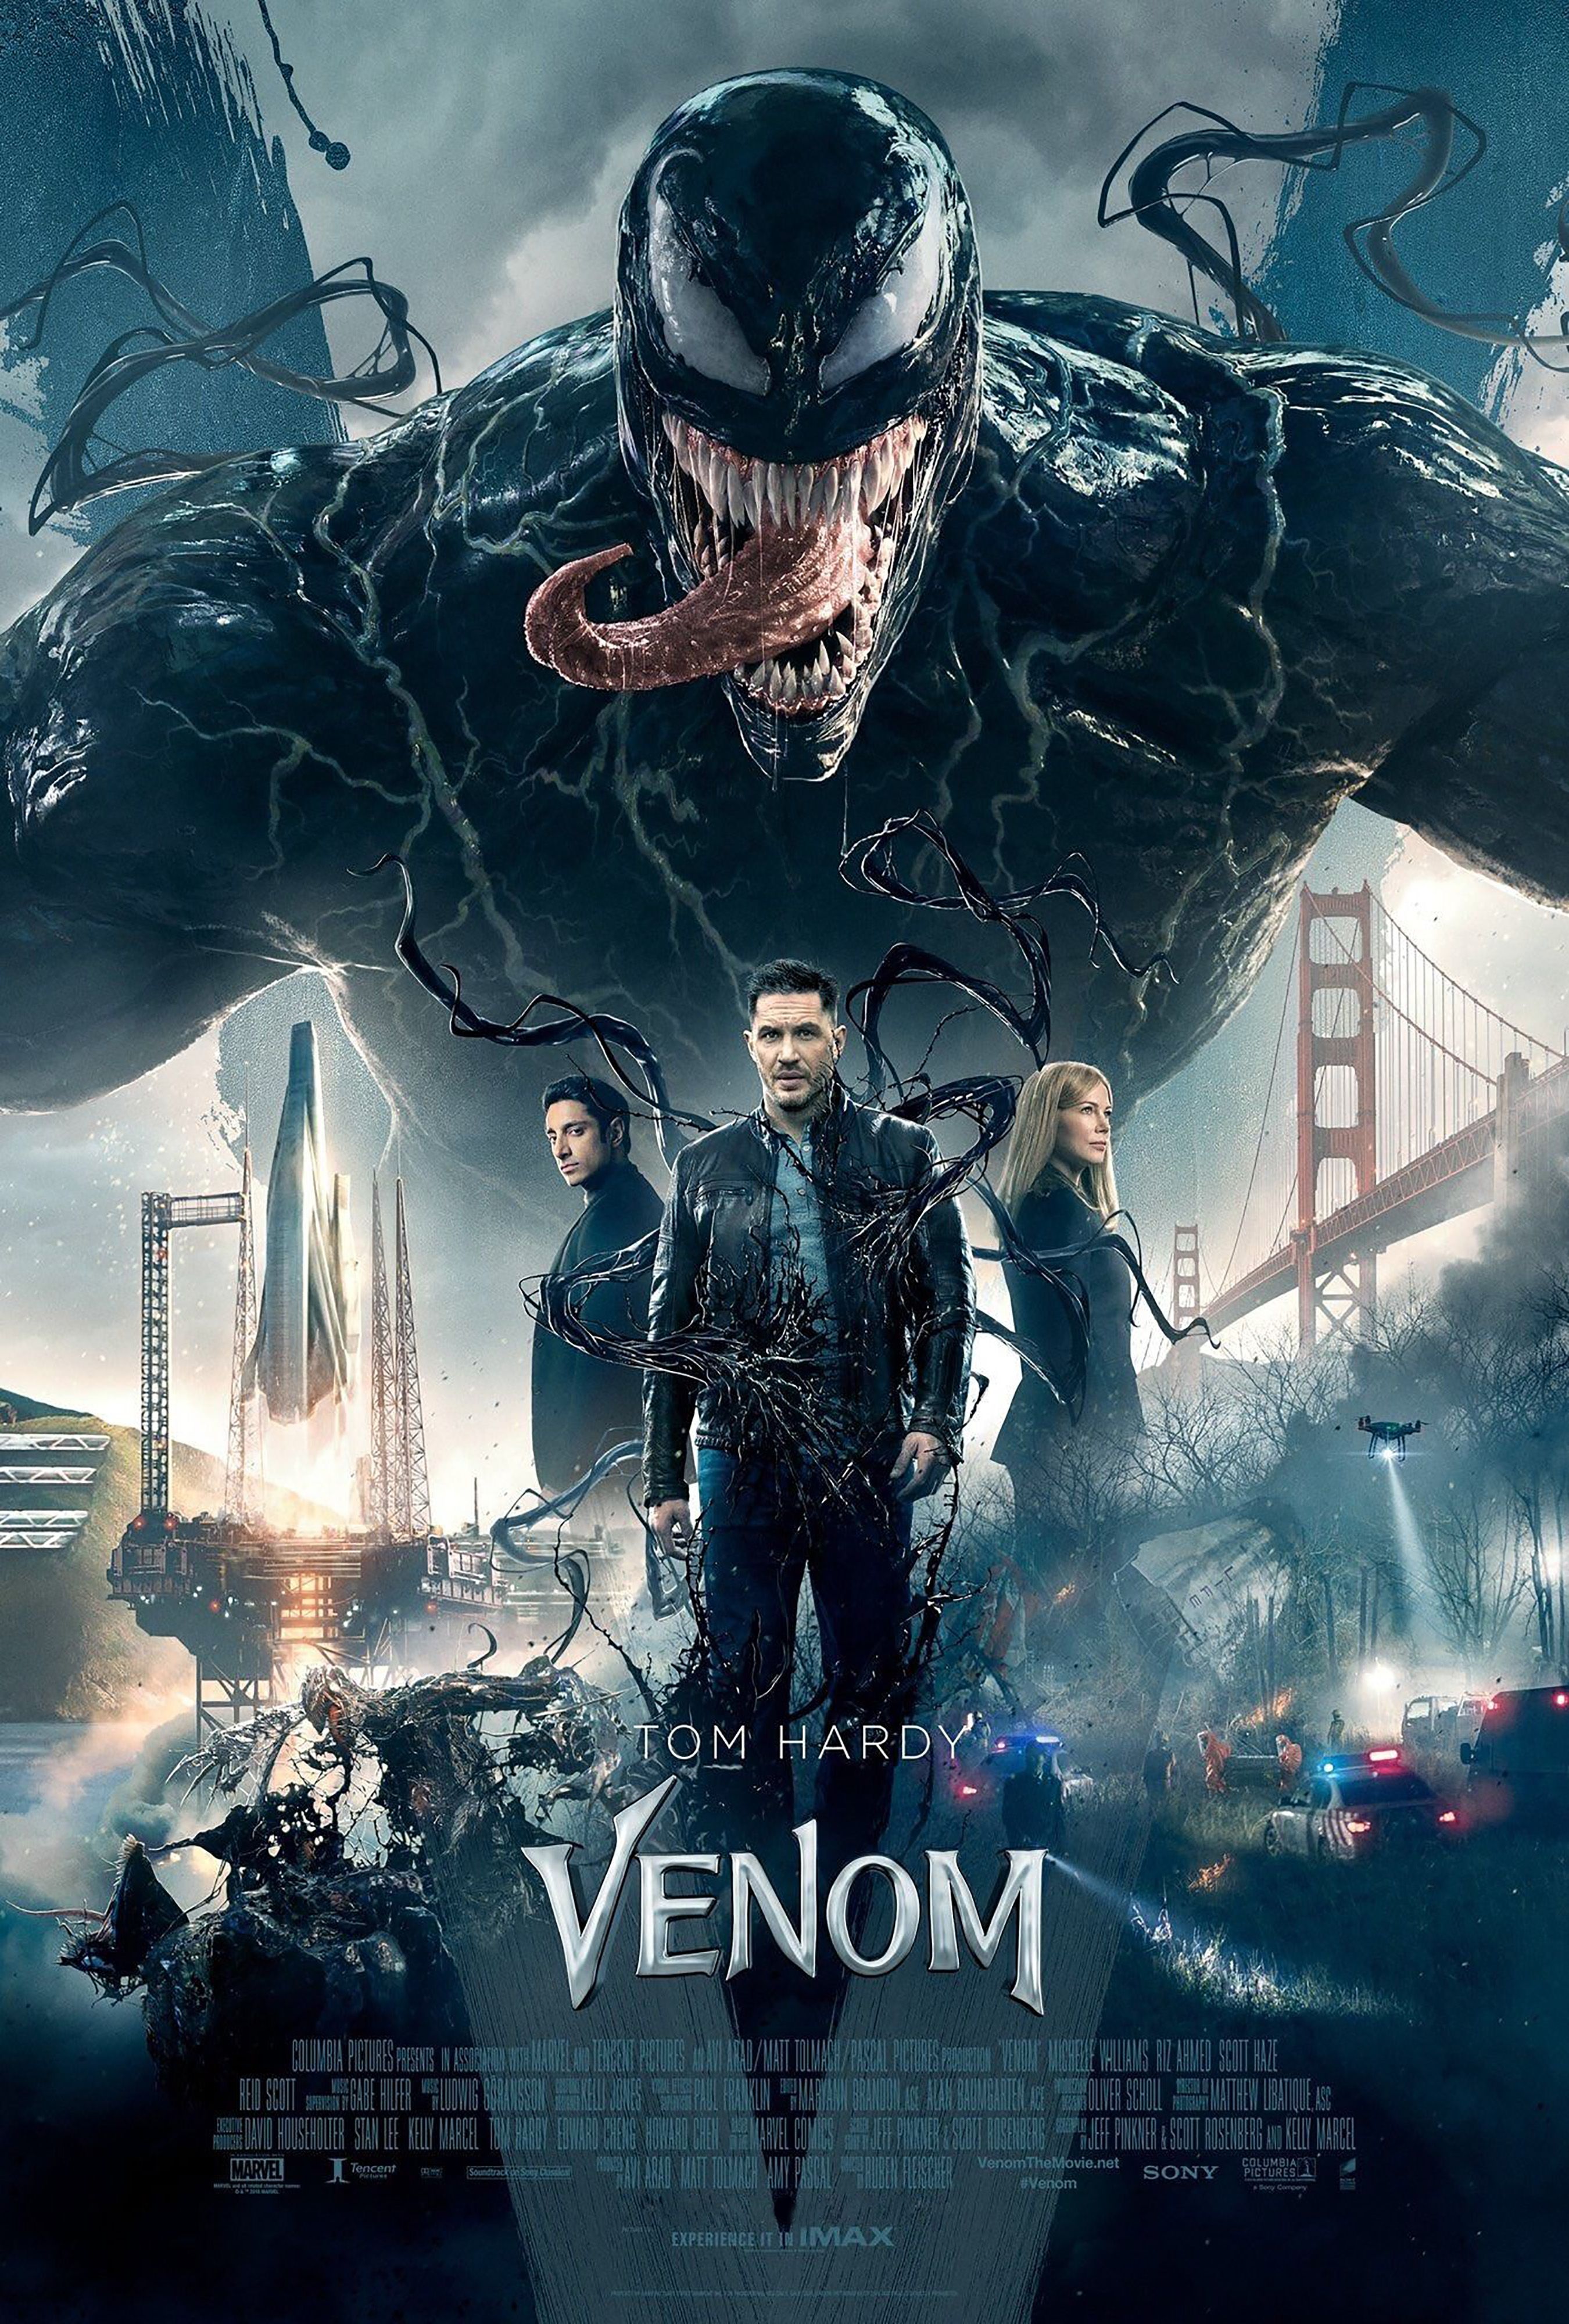 Venom film review: Tom Hardy takes on Spidey’s symbiote